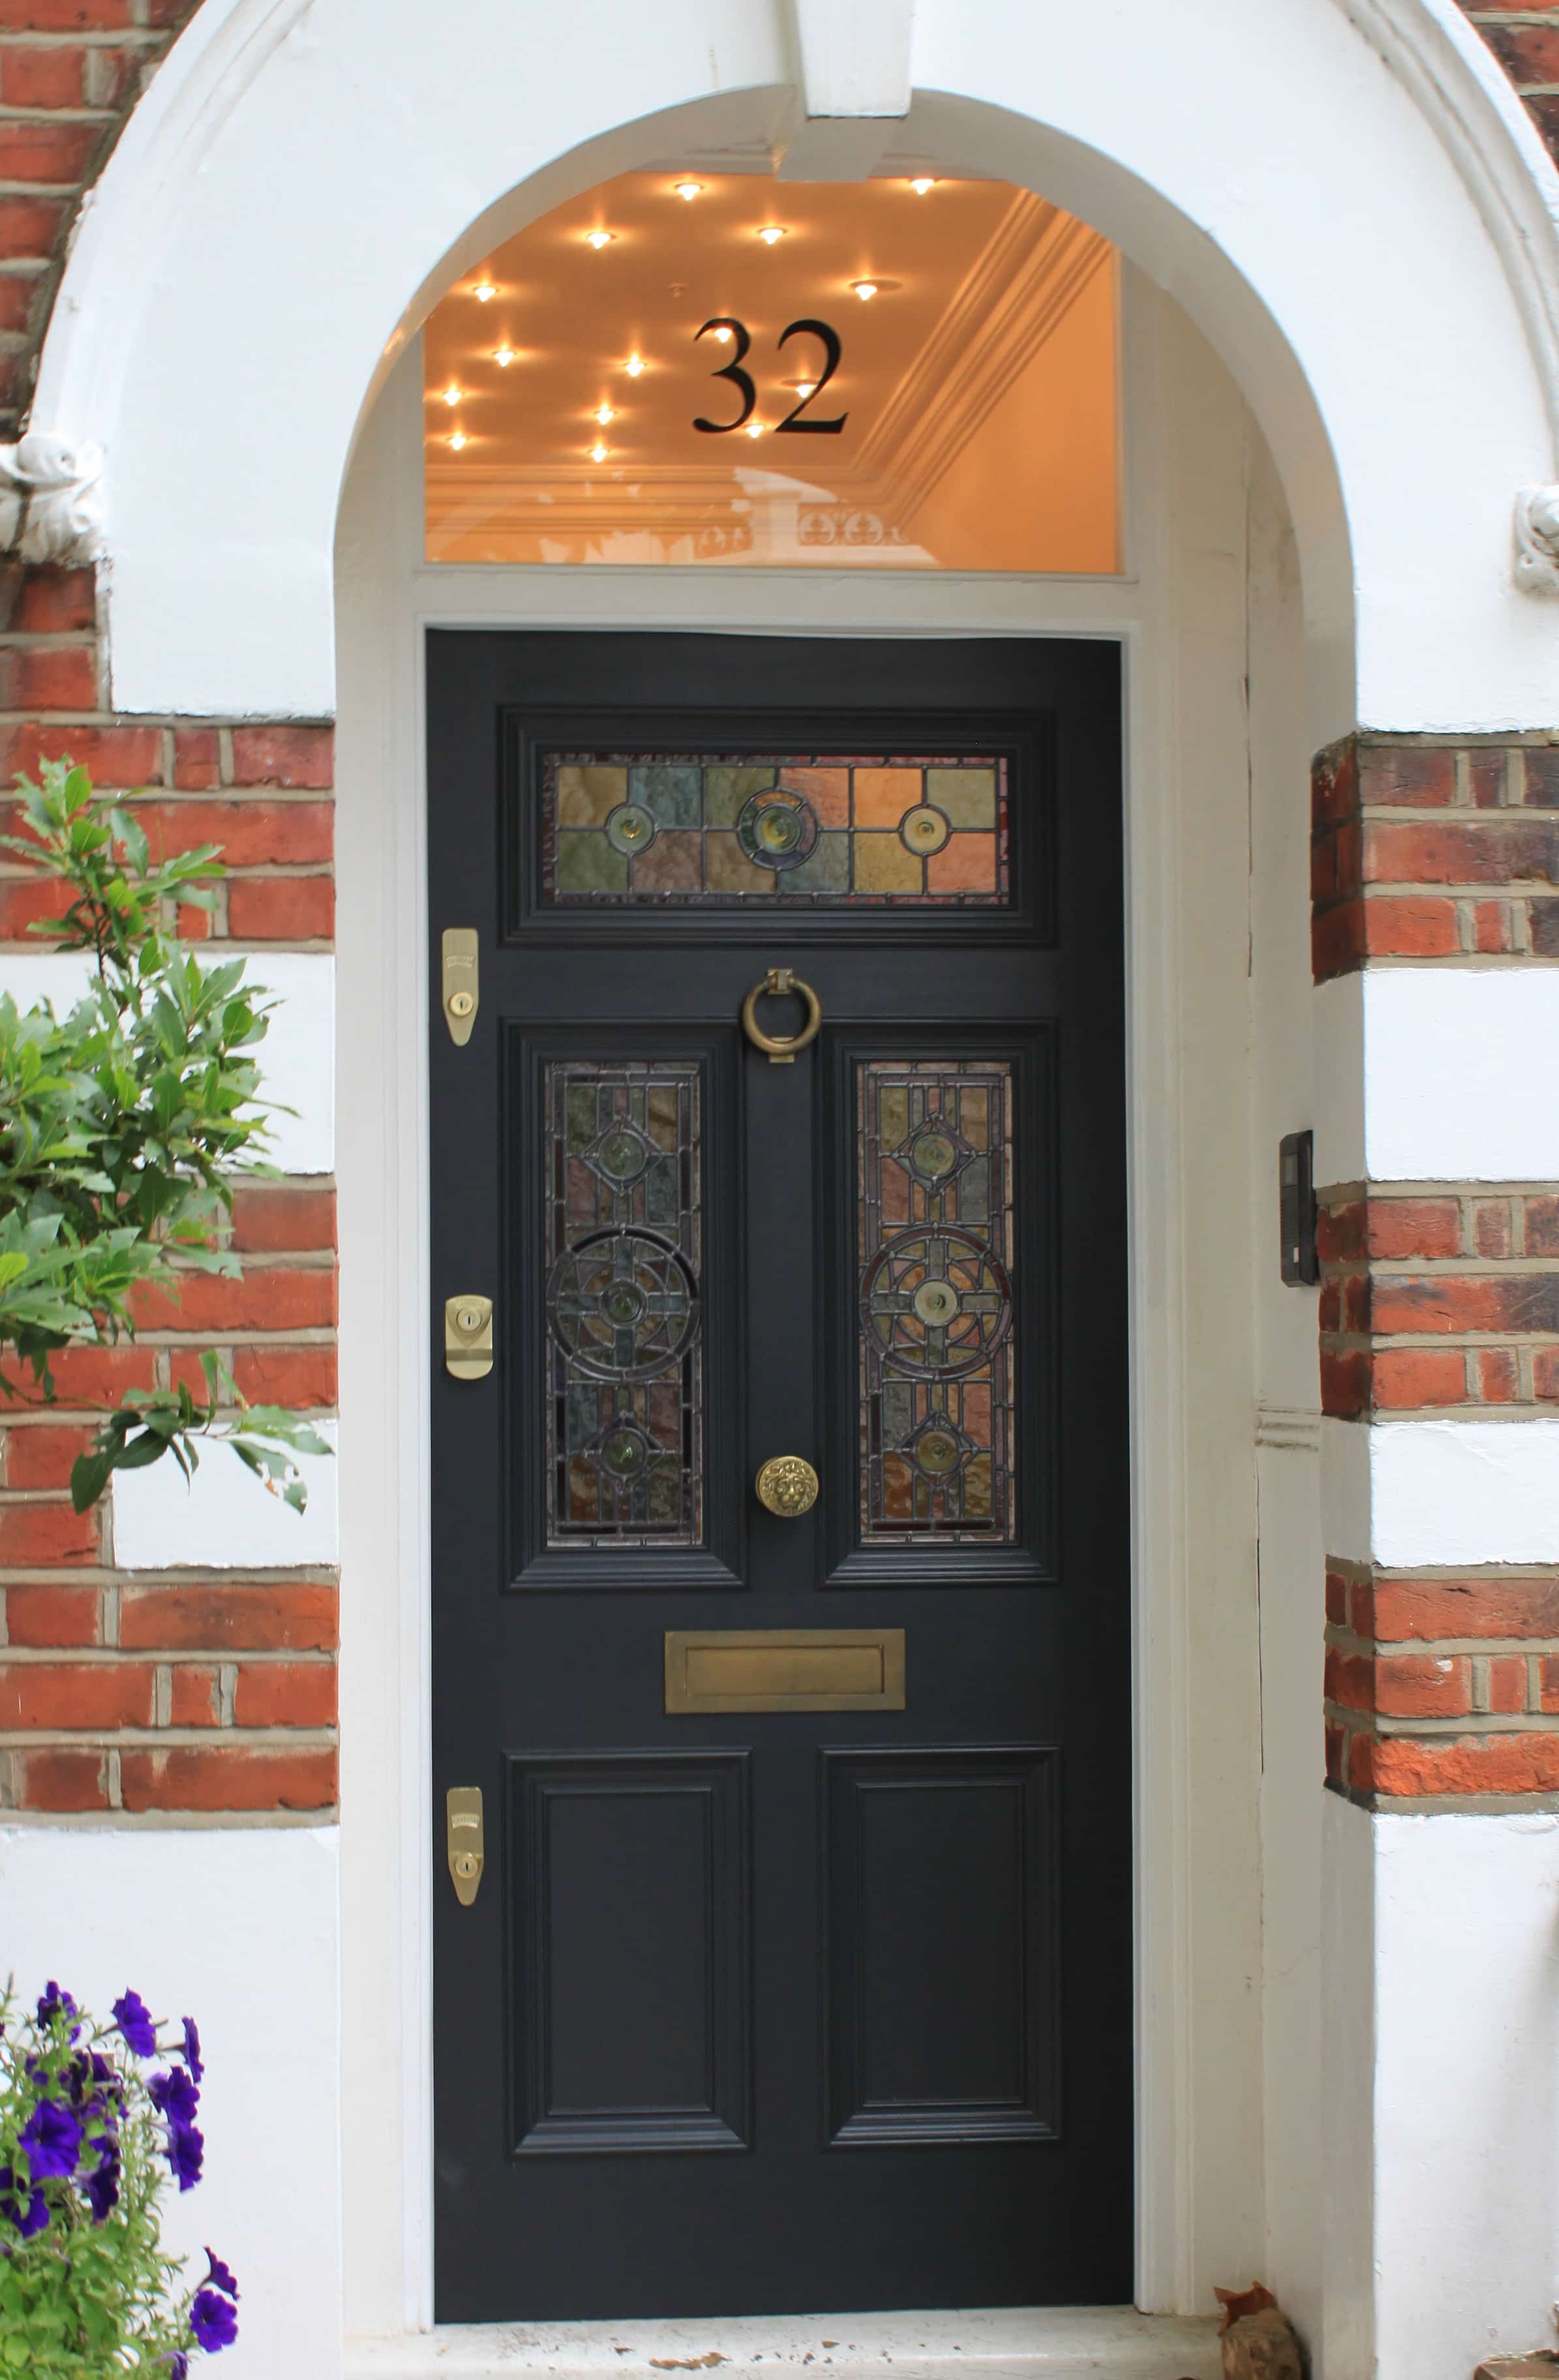 Edwardian Style Door (1901-1914)